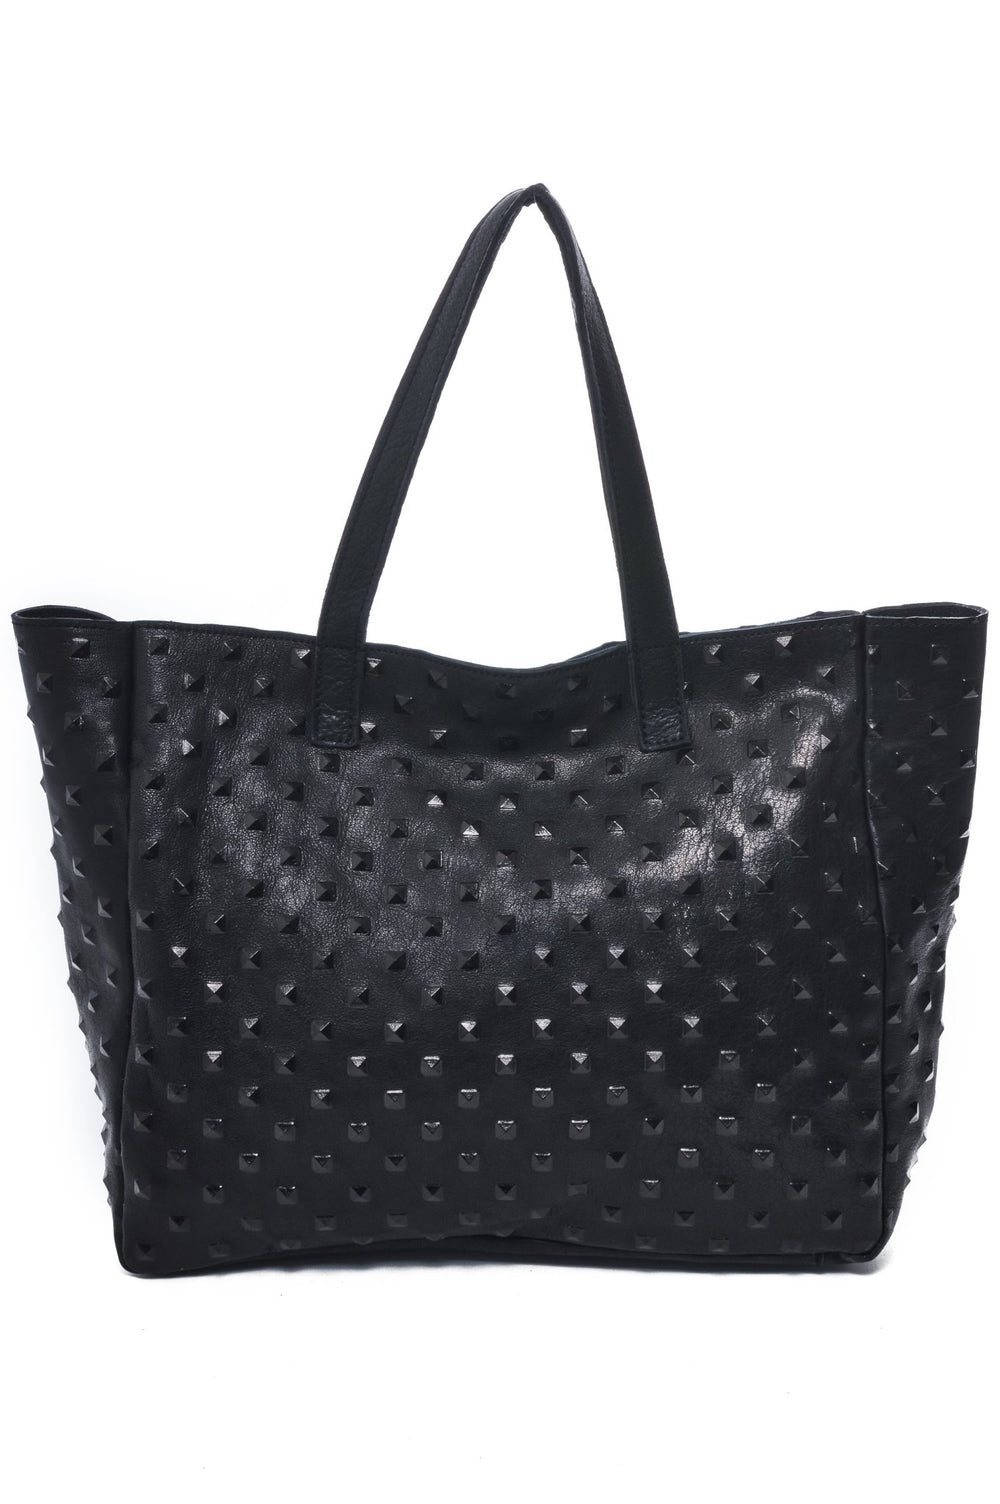 AMBER Black Studded - Carla Mancini Handbags